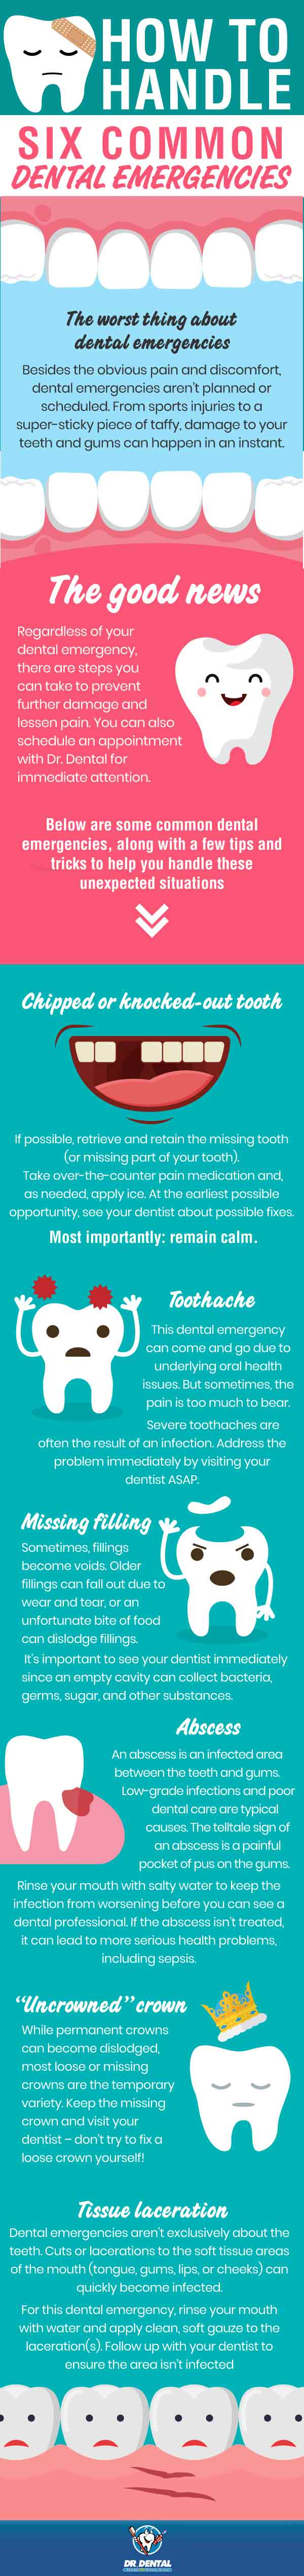 How to Handle Six Common Dental Emergencies